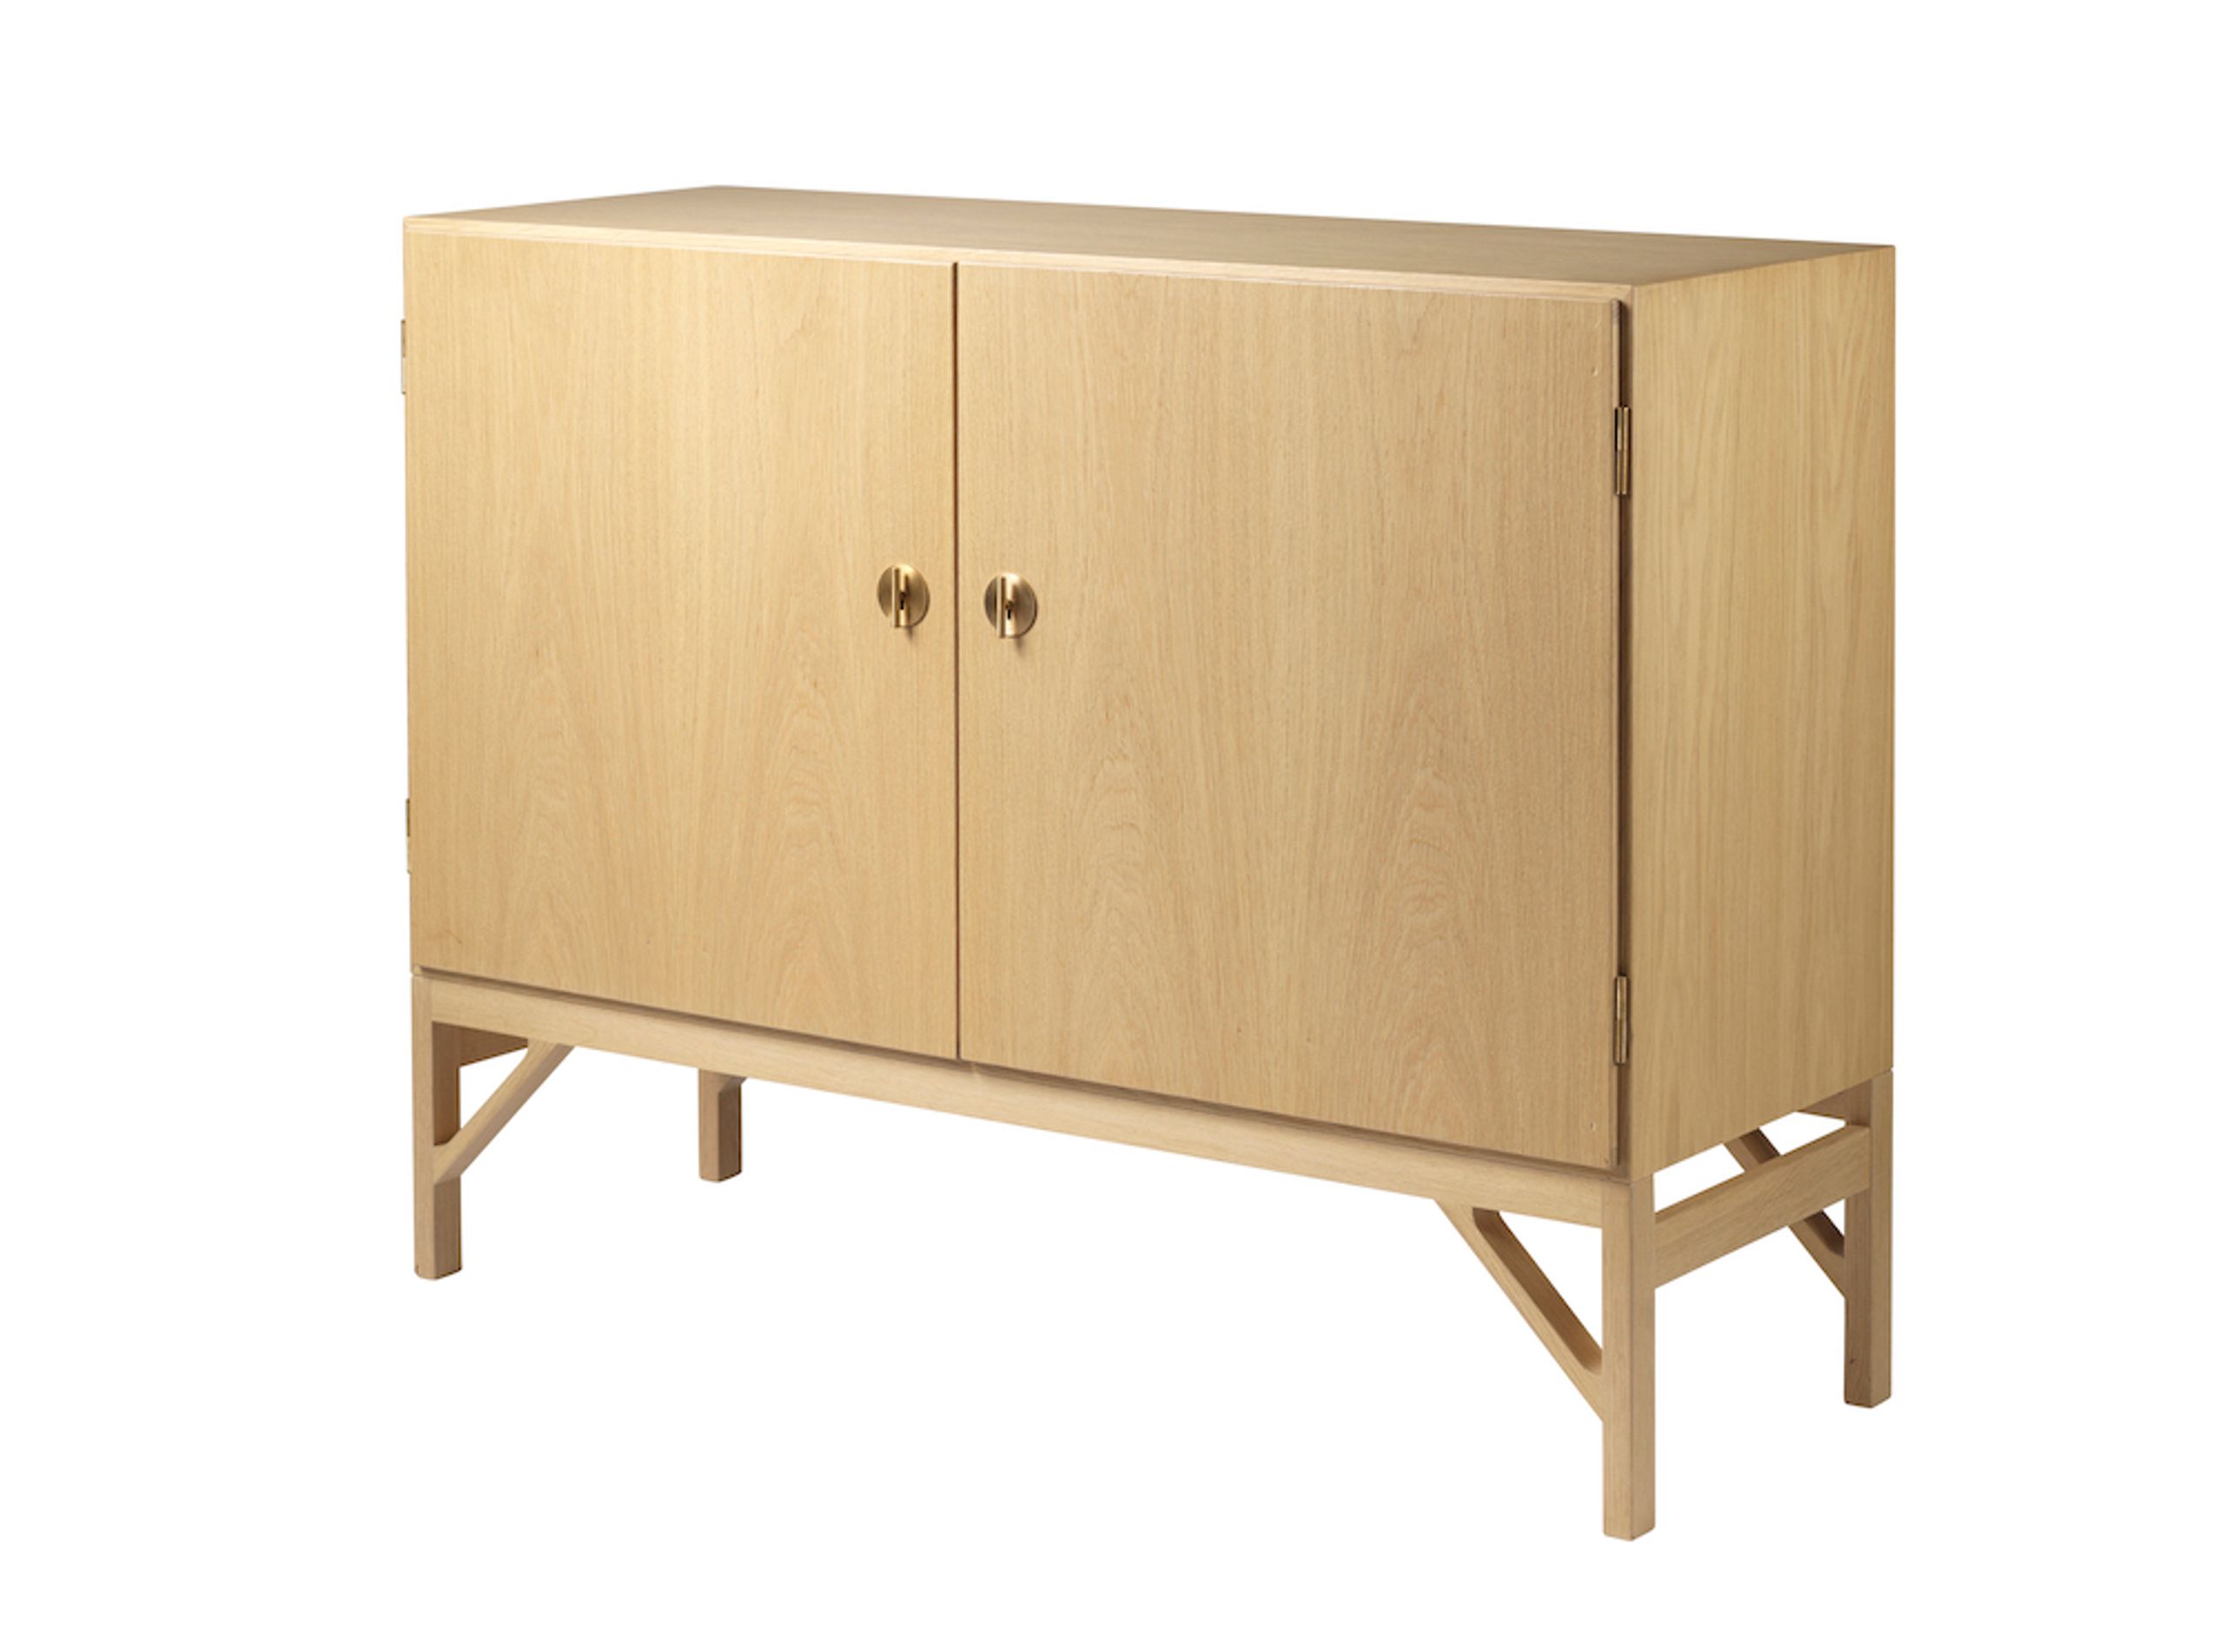 FDB Møbler / Furniture - Sideboard - A232 Sideboard - Oak